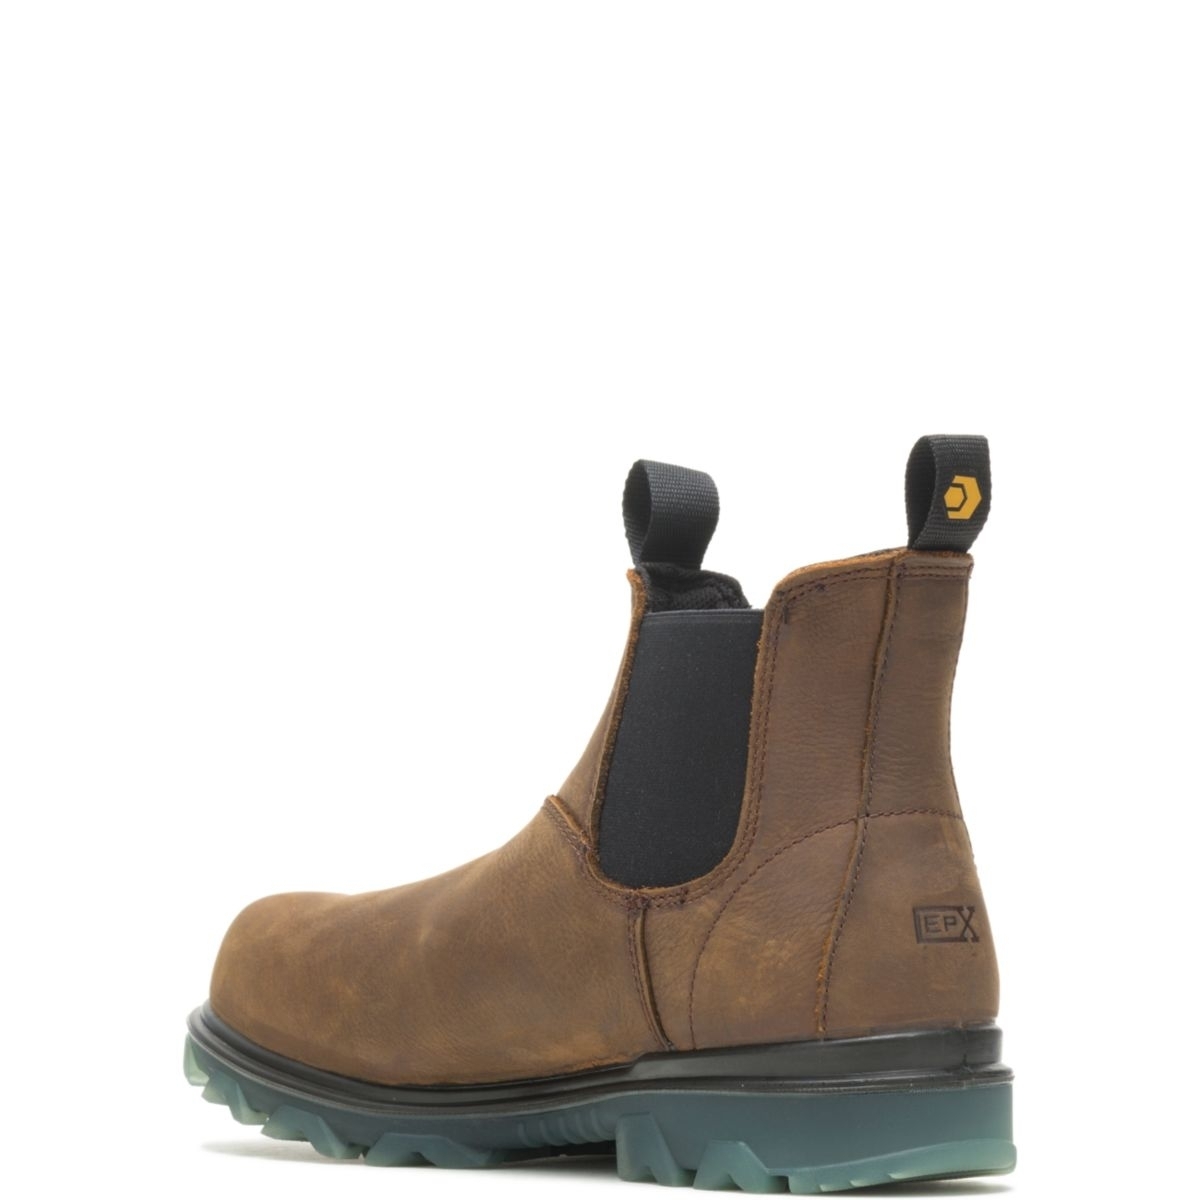 WOLVERINE Men's I-90 EPXÂ® Waterproof Soft Toe Romeo Pull On Work Boot Brown - W10790 - SUDAN BROWN, 7.5